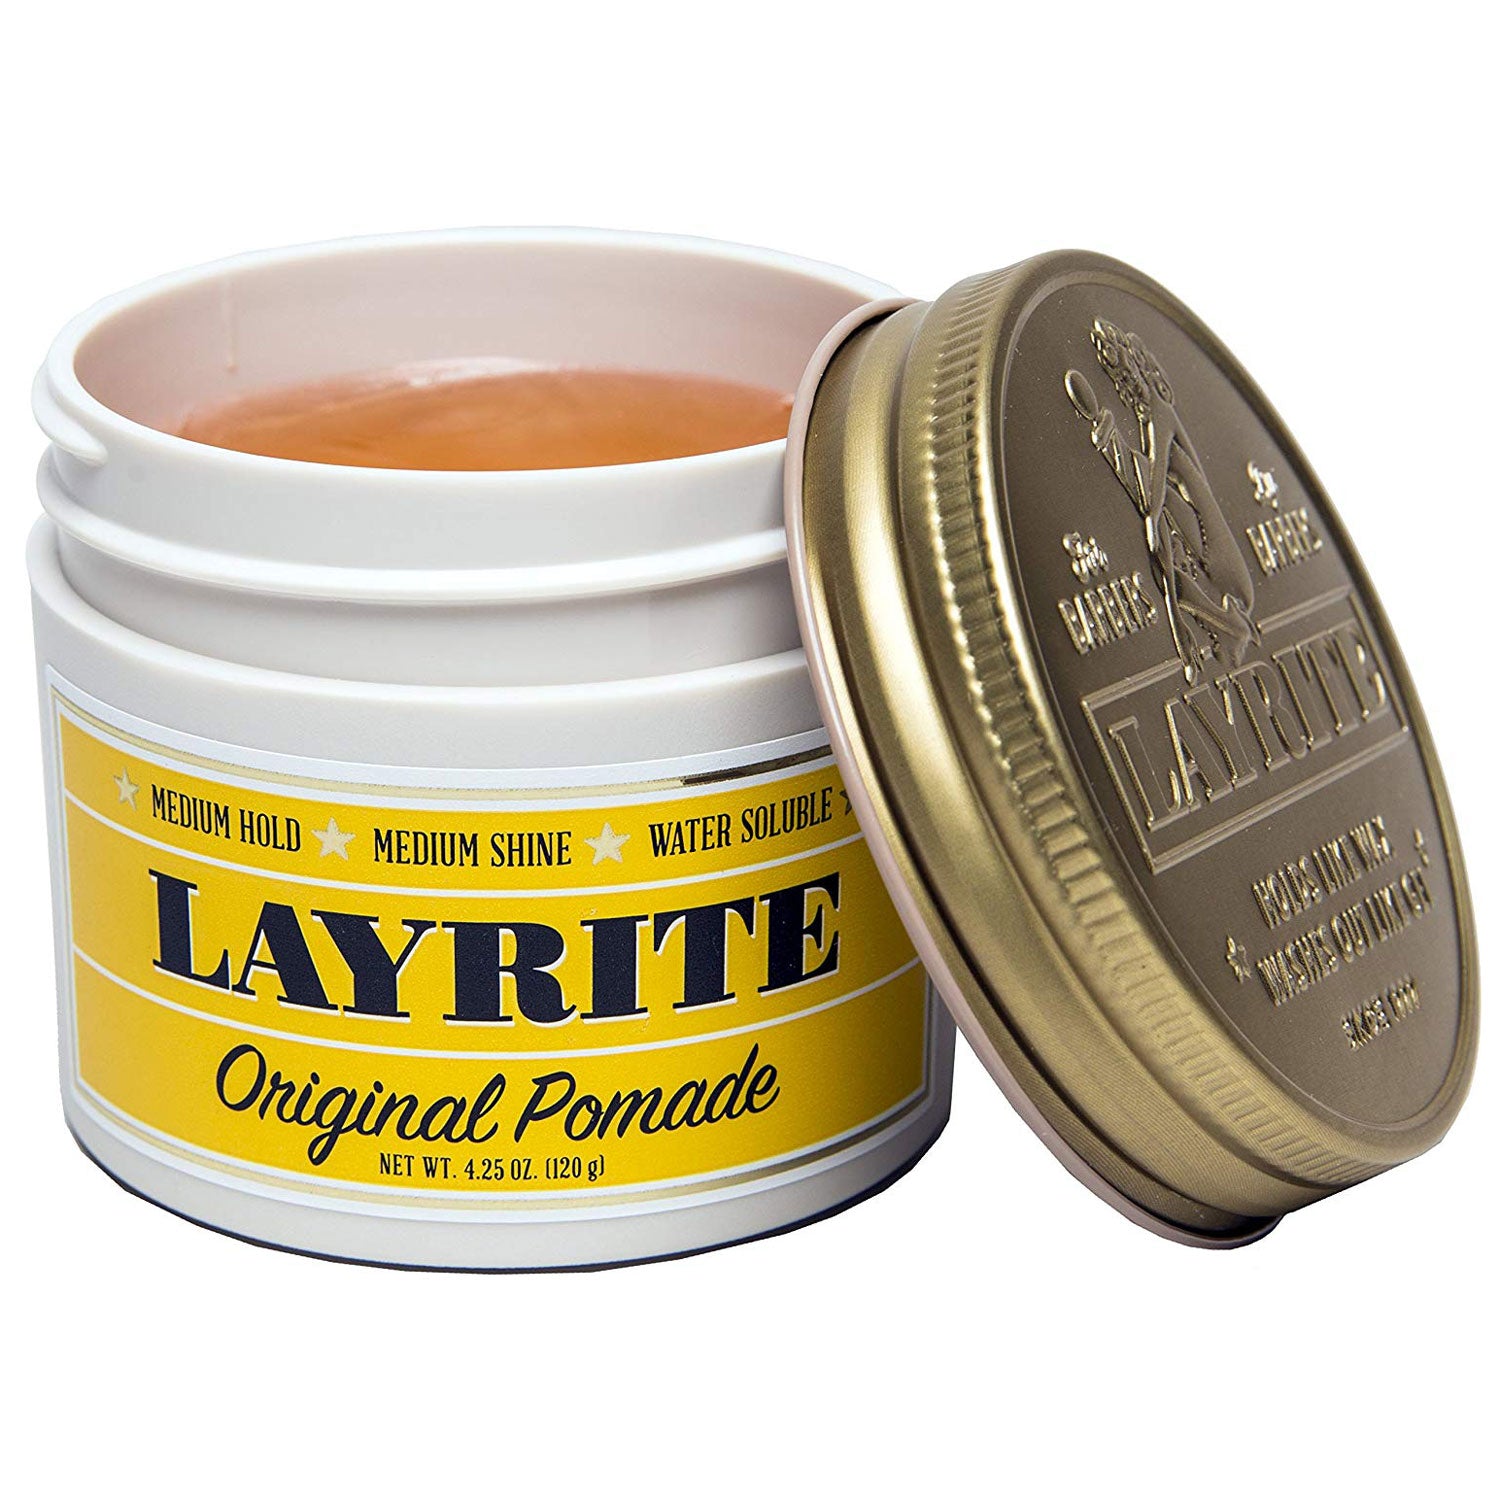 Layrite Original Pomade 120g | Strong Hold Medium Shine Styling Pomade - Orcadia